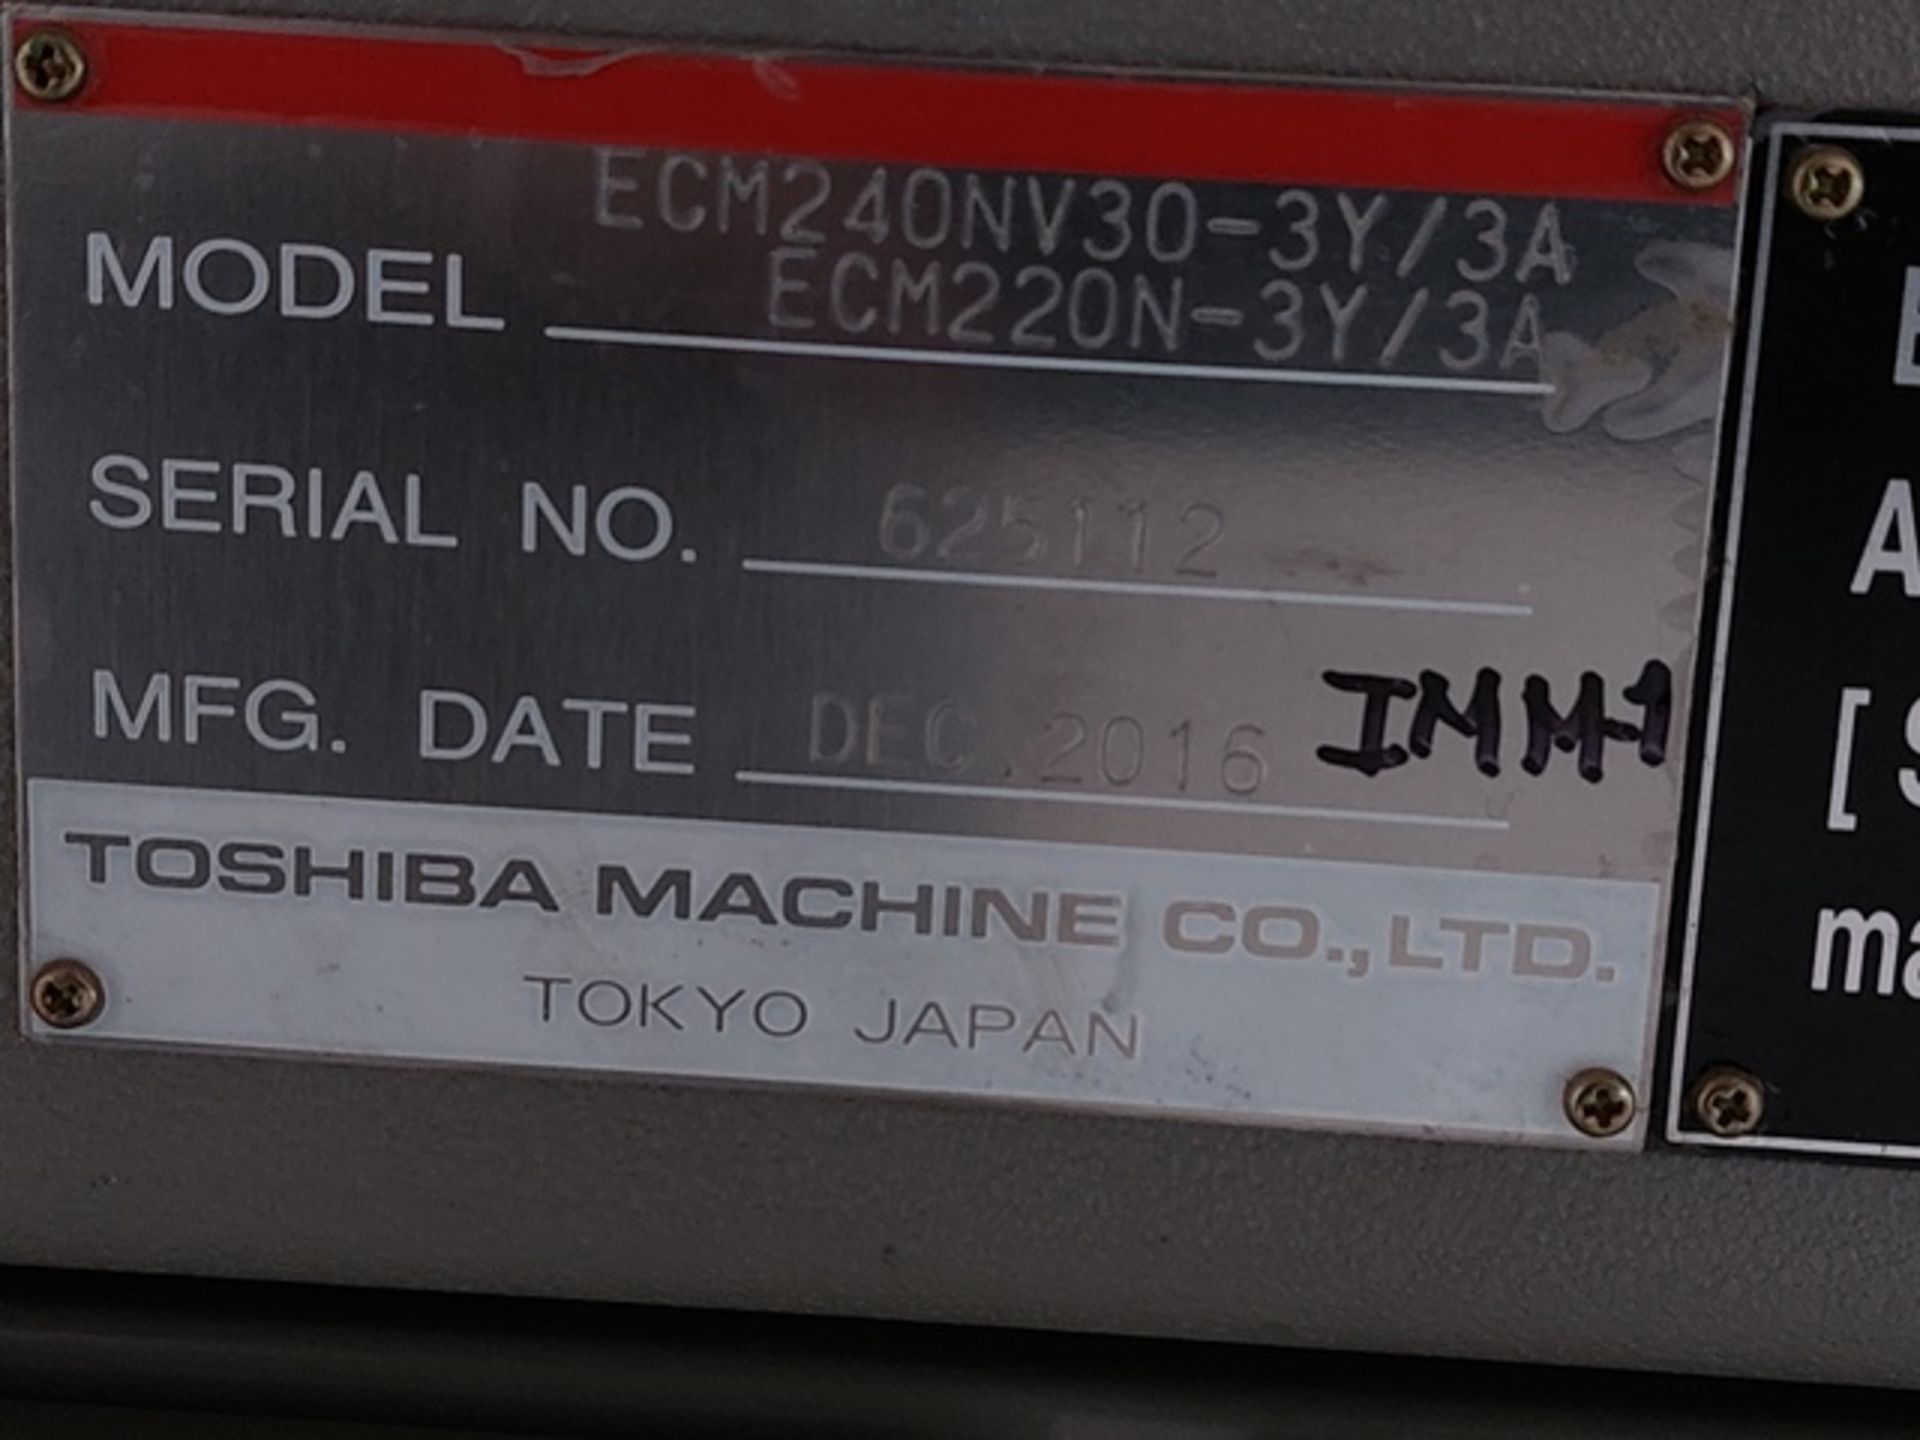 240 Ton 3.7/4.7 oz Toshiba Model ECM240NV30-3Y/3A 2-Shot Electric Injection Molding Machine - Image 18 of 21